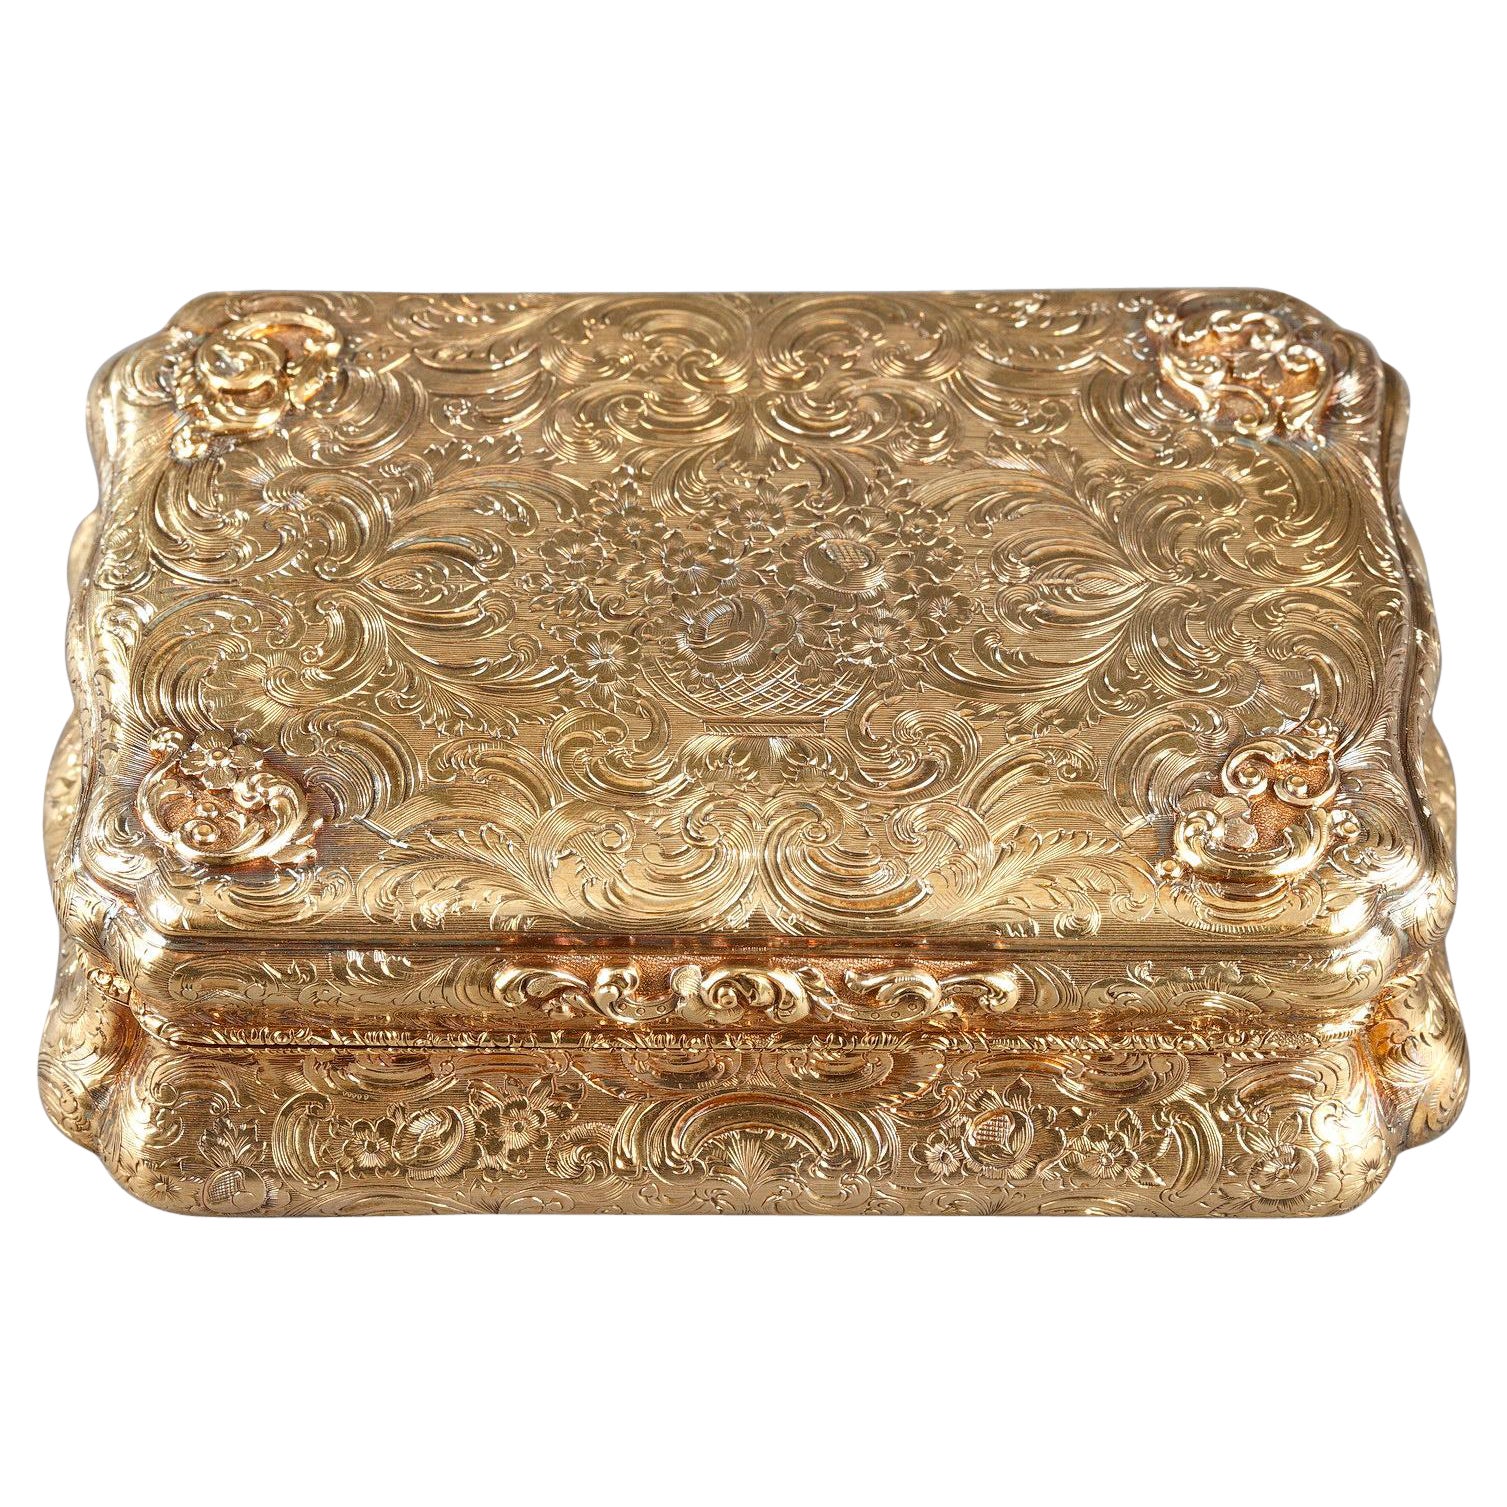 Mid-19th century Hanau Gold Box. 